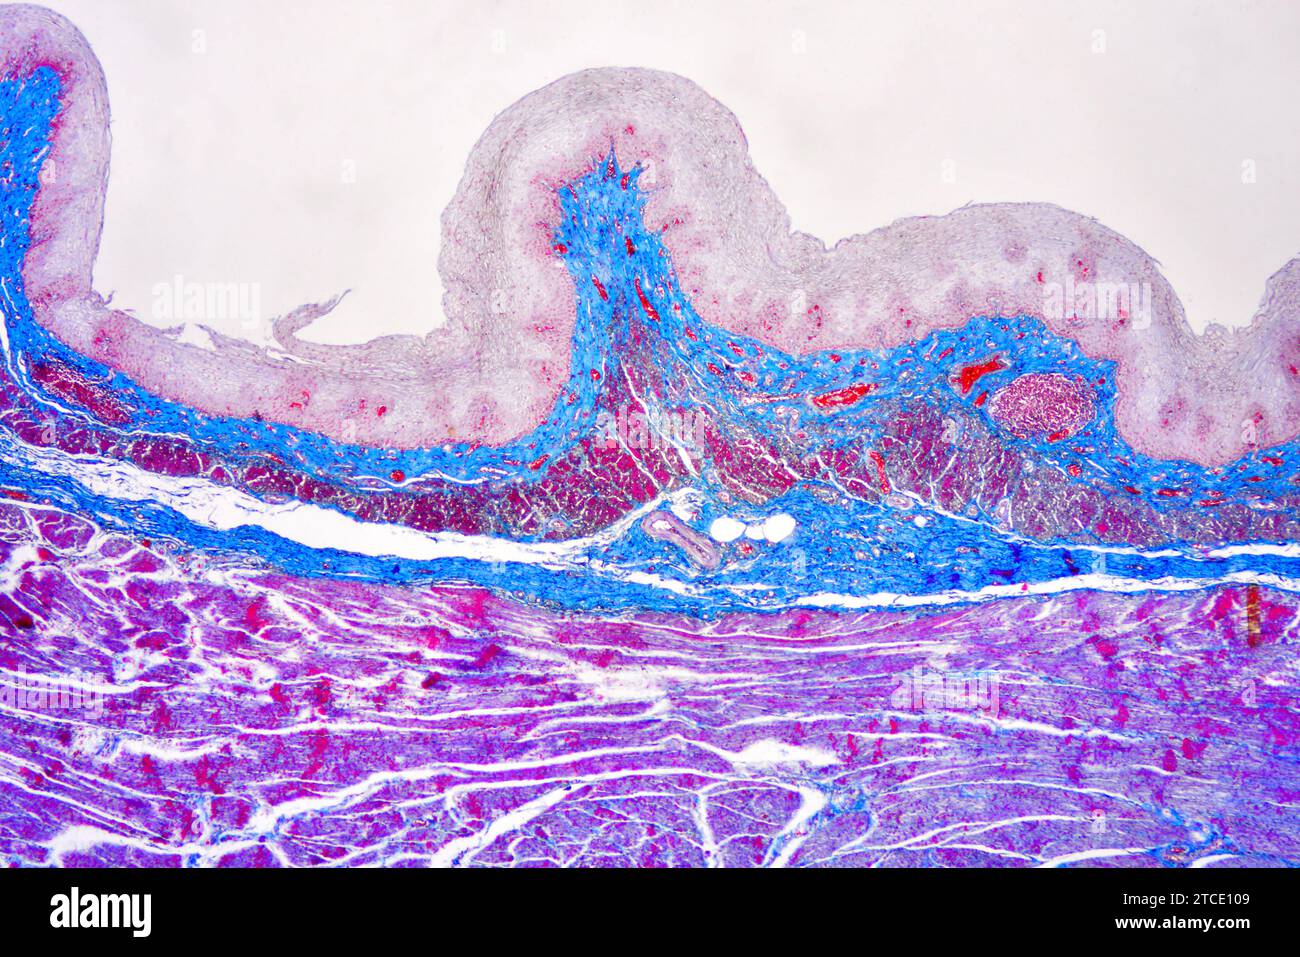 Human esophagus or oesophagus showing squamous epithelium stratified. Optical microscope X40. Stock Photo